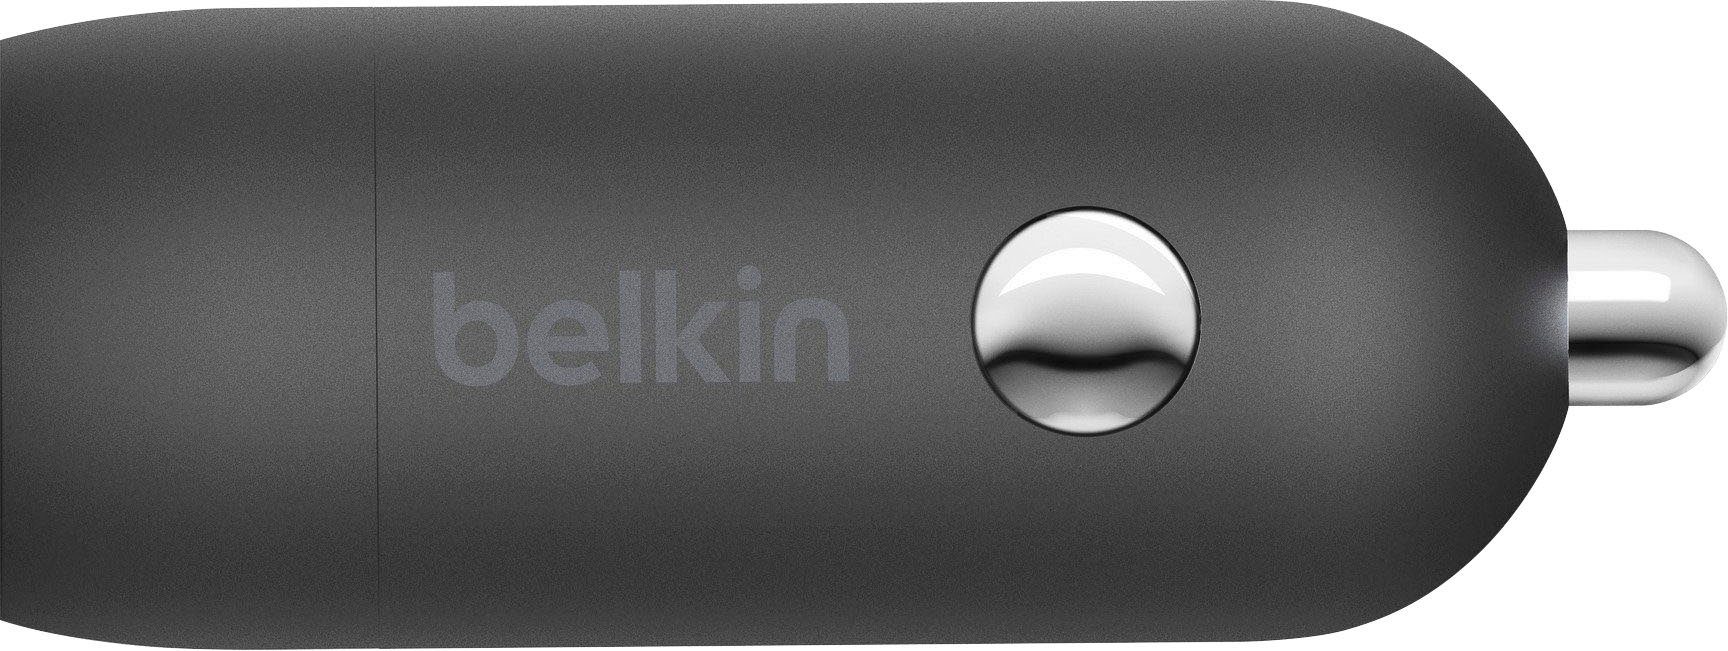 Belkin 20W mit Power Kfz-Ladegerät Autobatterie-Ladegerät USB-C Delivery